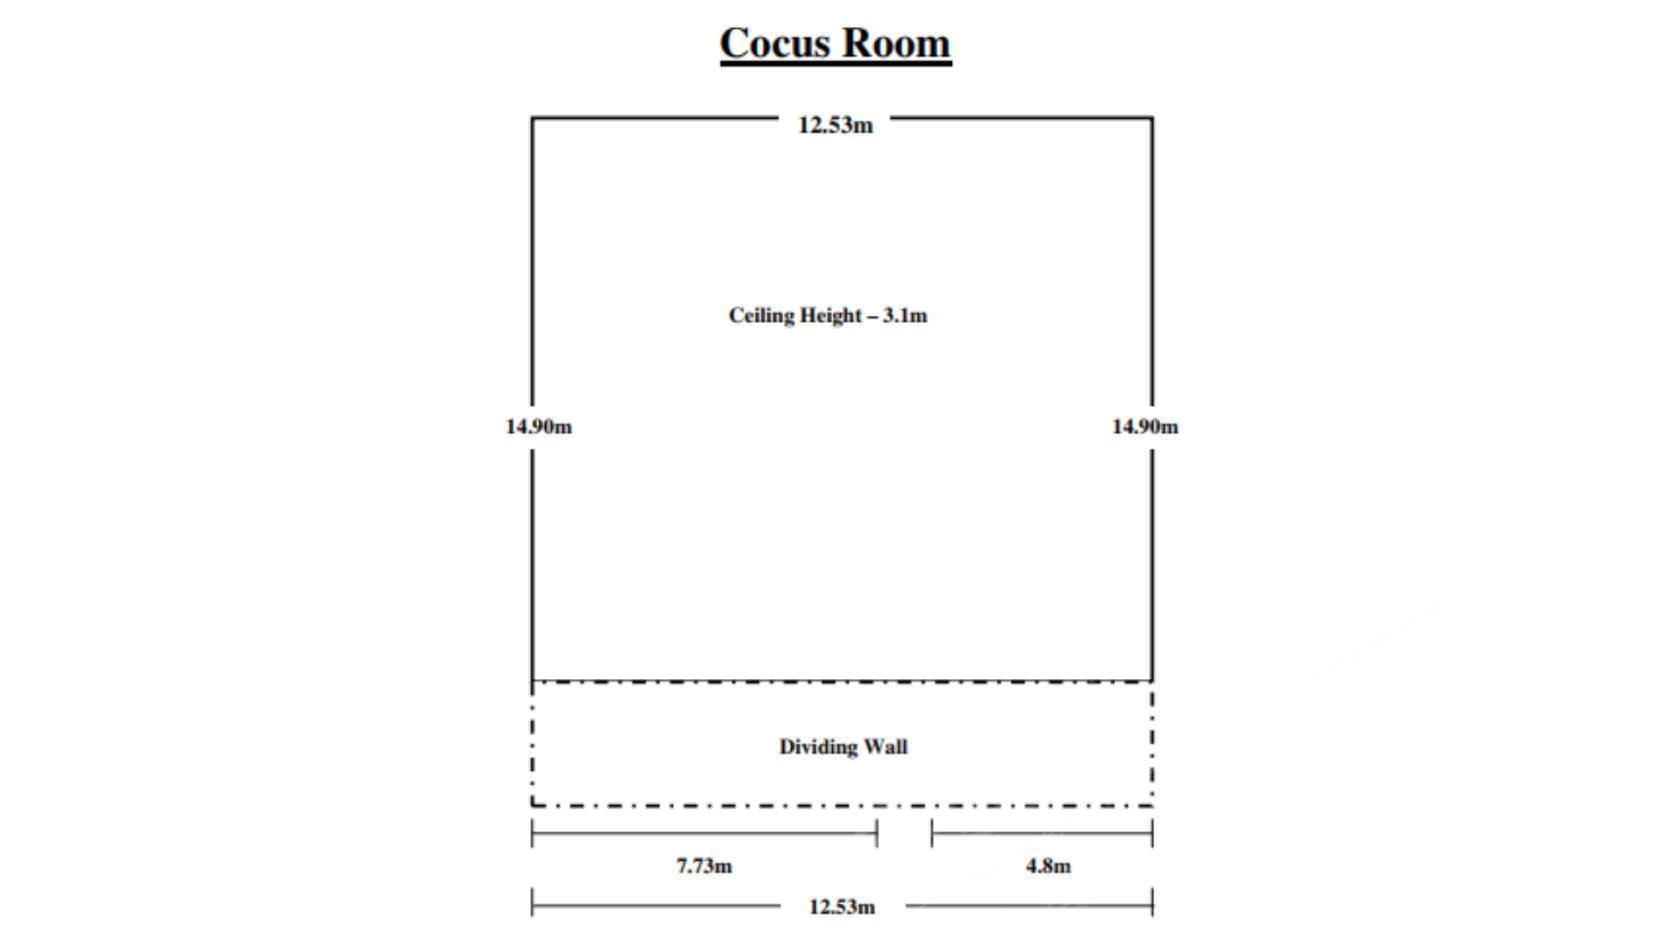 Cocus Room